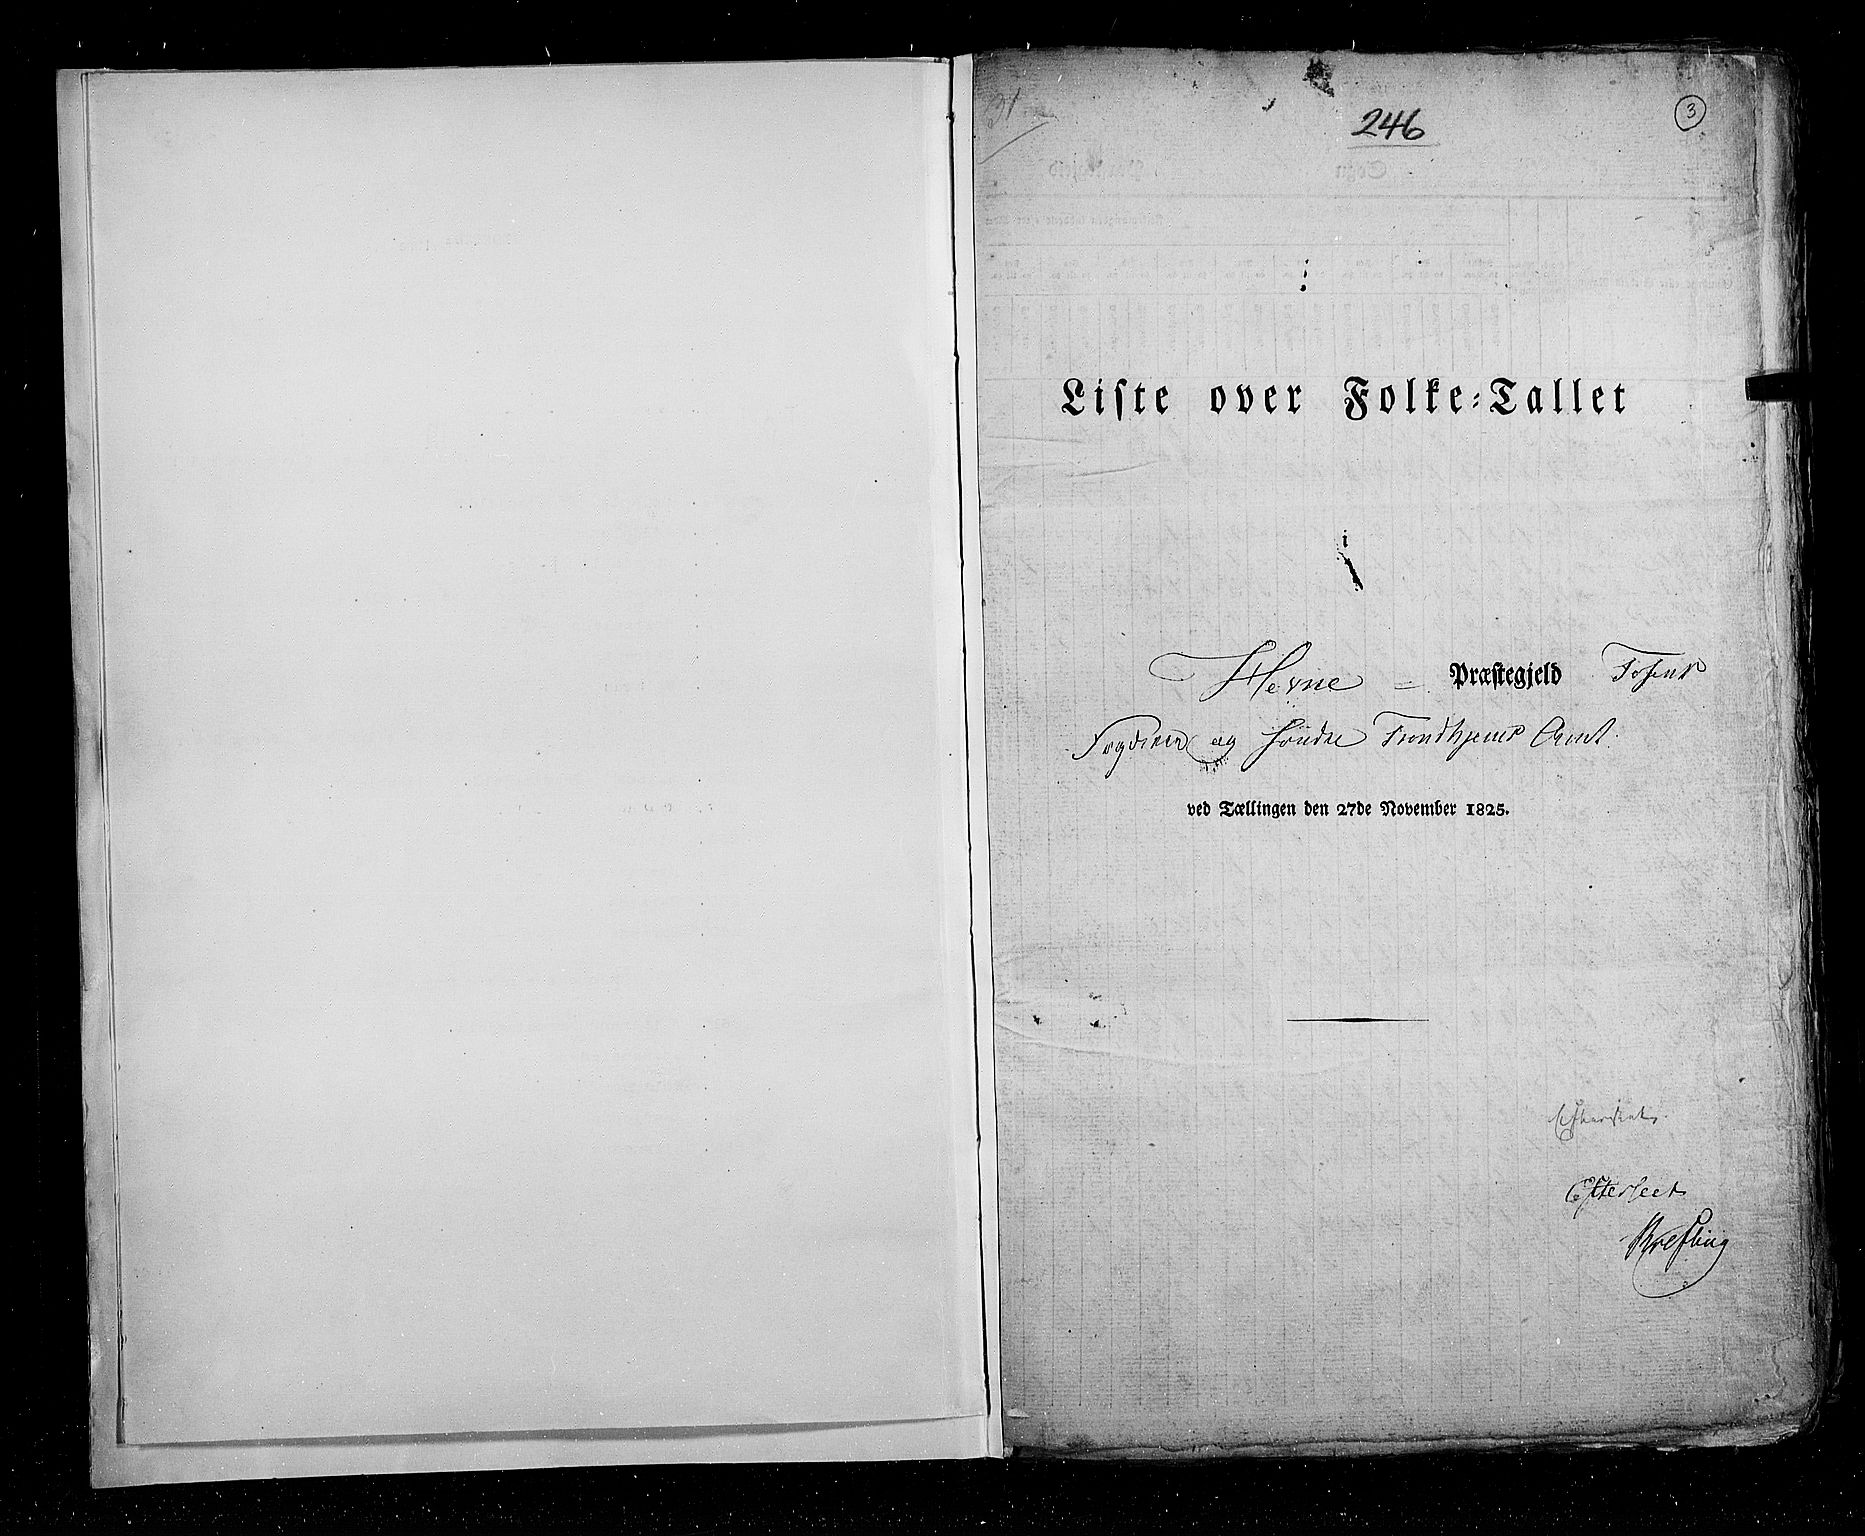 RA, Census 1825, vol. 16: Søndre Trondhjem amt, 1825, p. 3